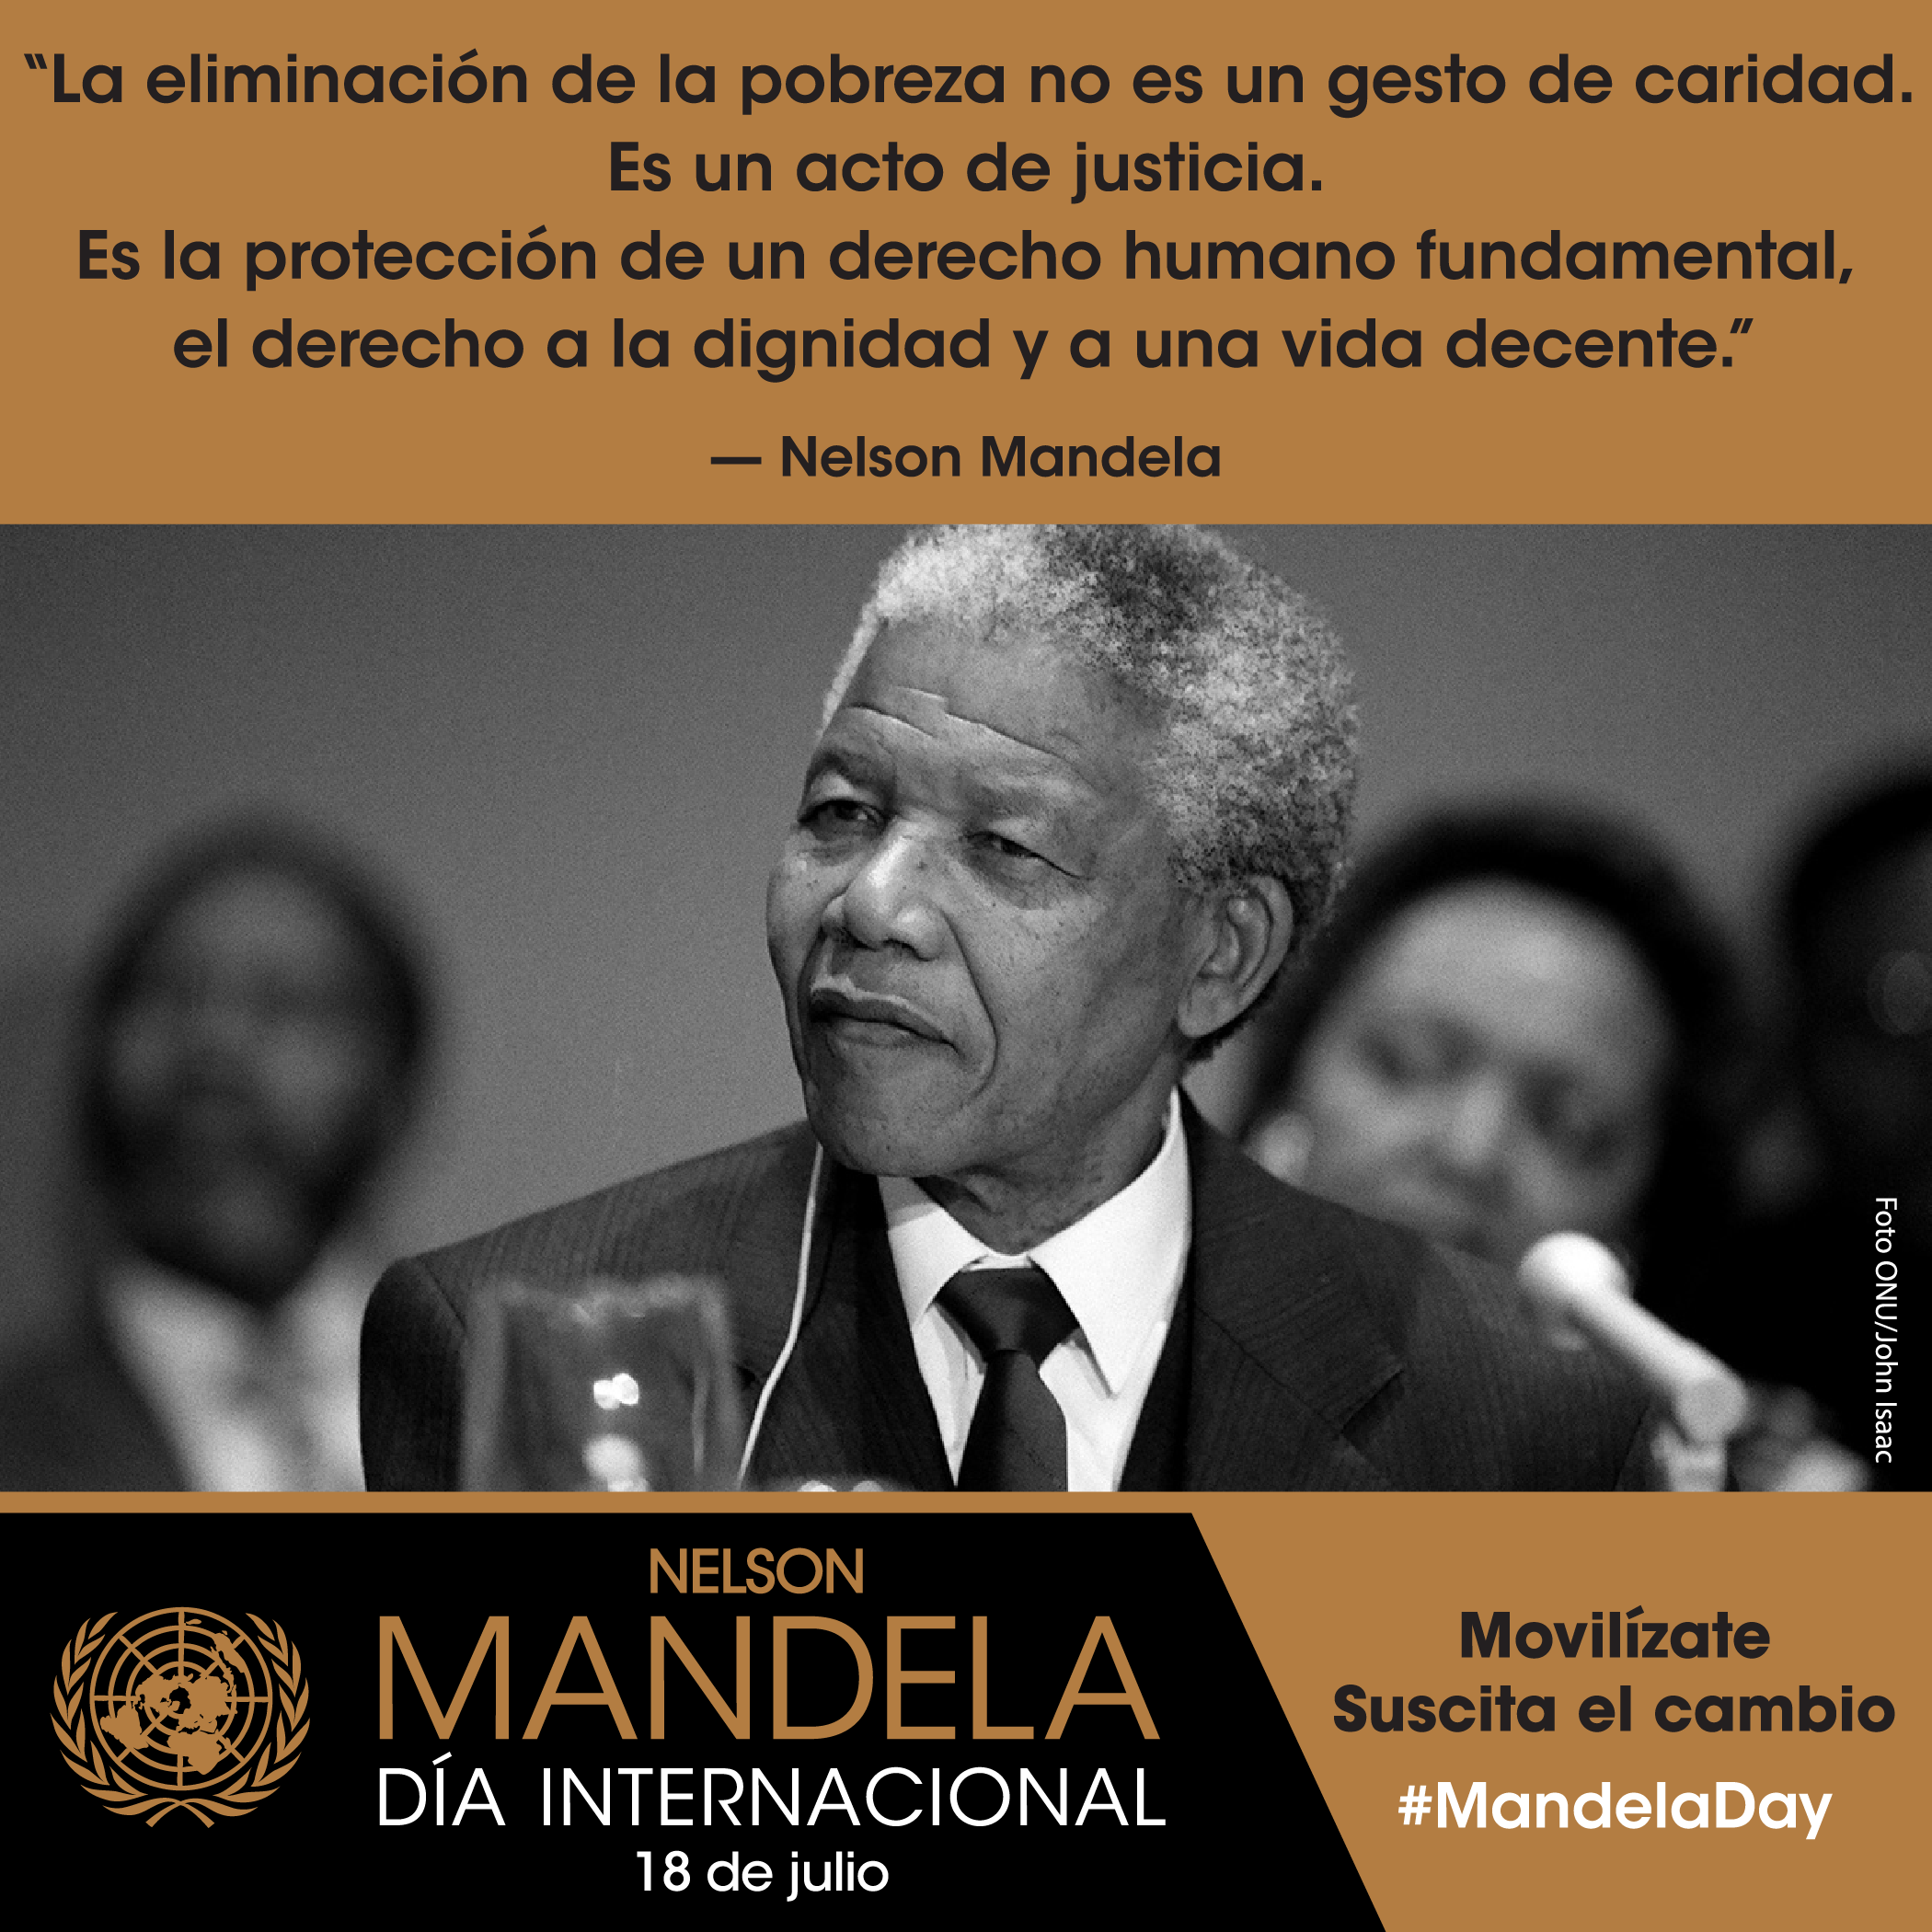  Día Internacional de Nelson Mandela, 18 de julio  Nelson_Mandela_Day_2019_poverty-SP